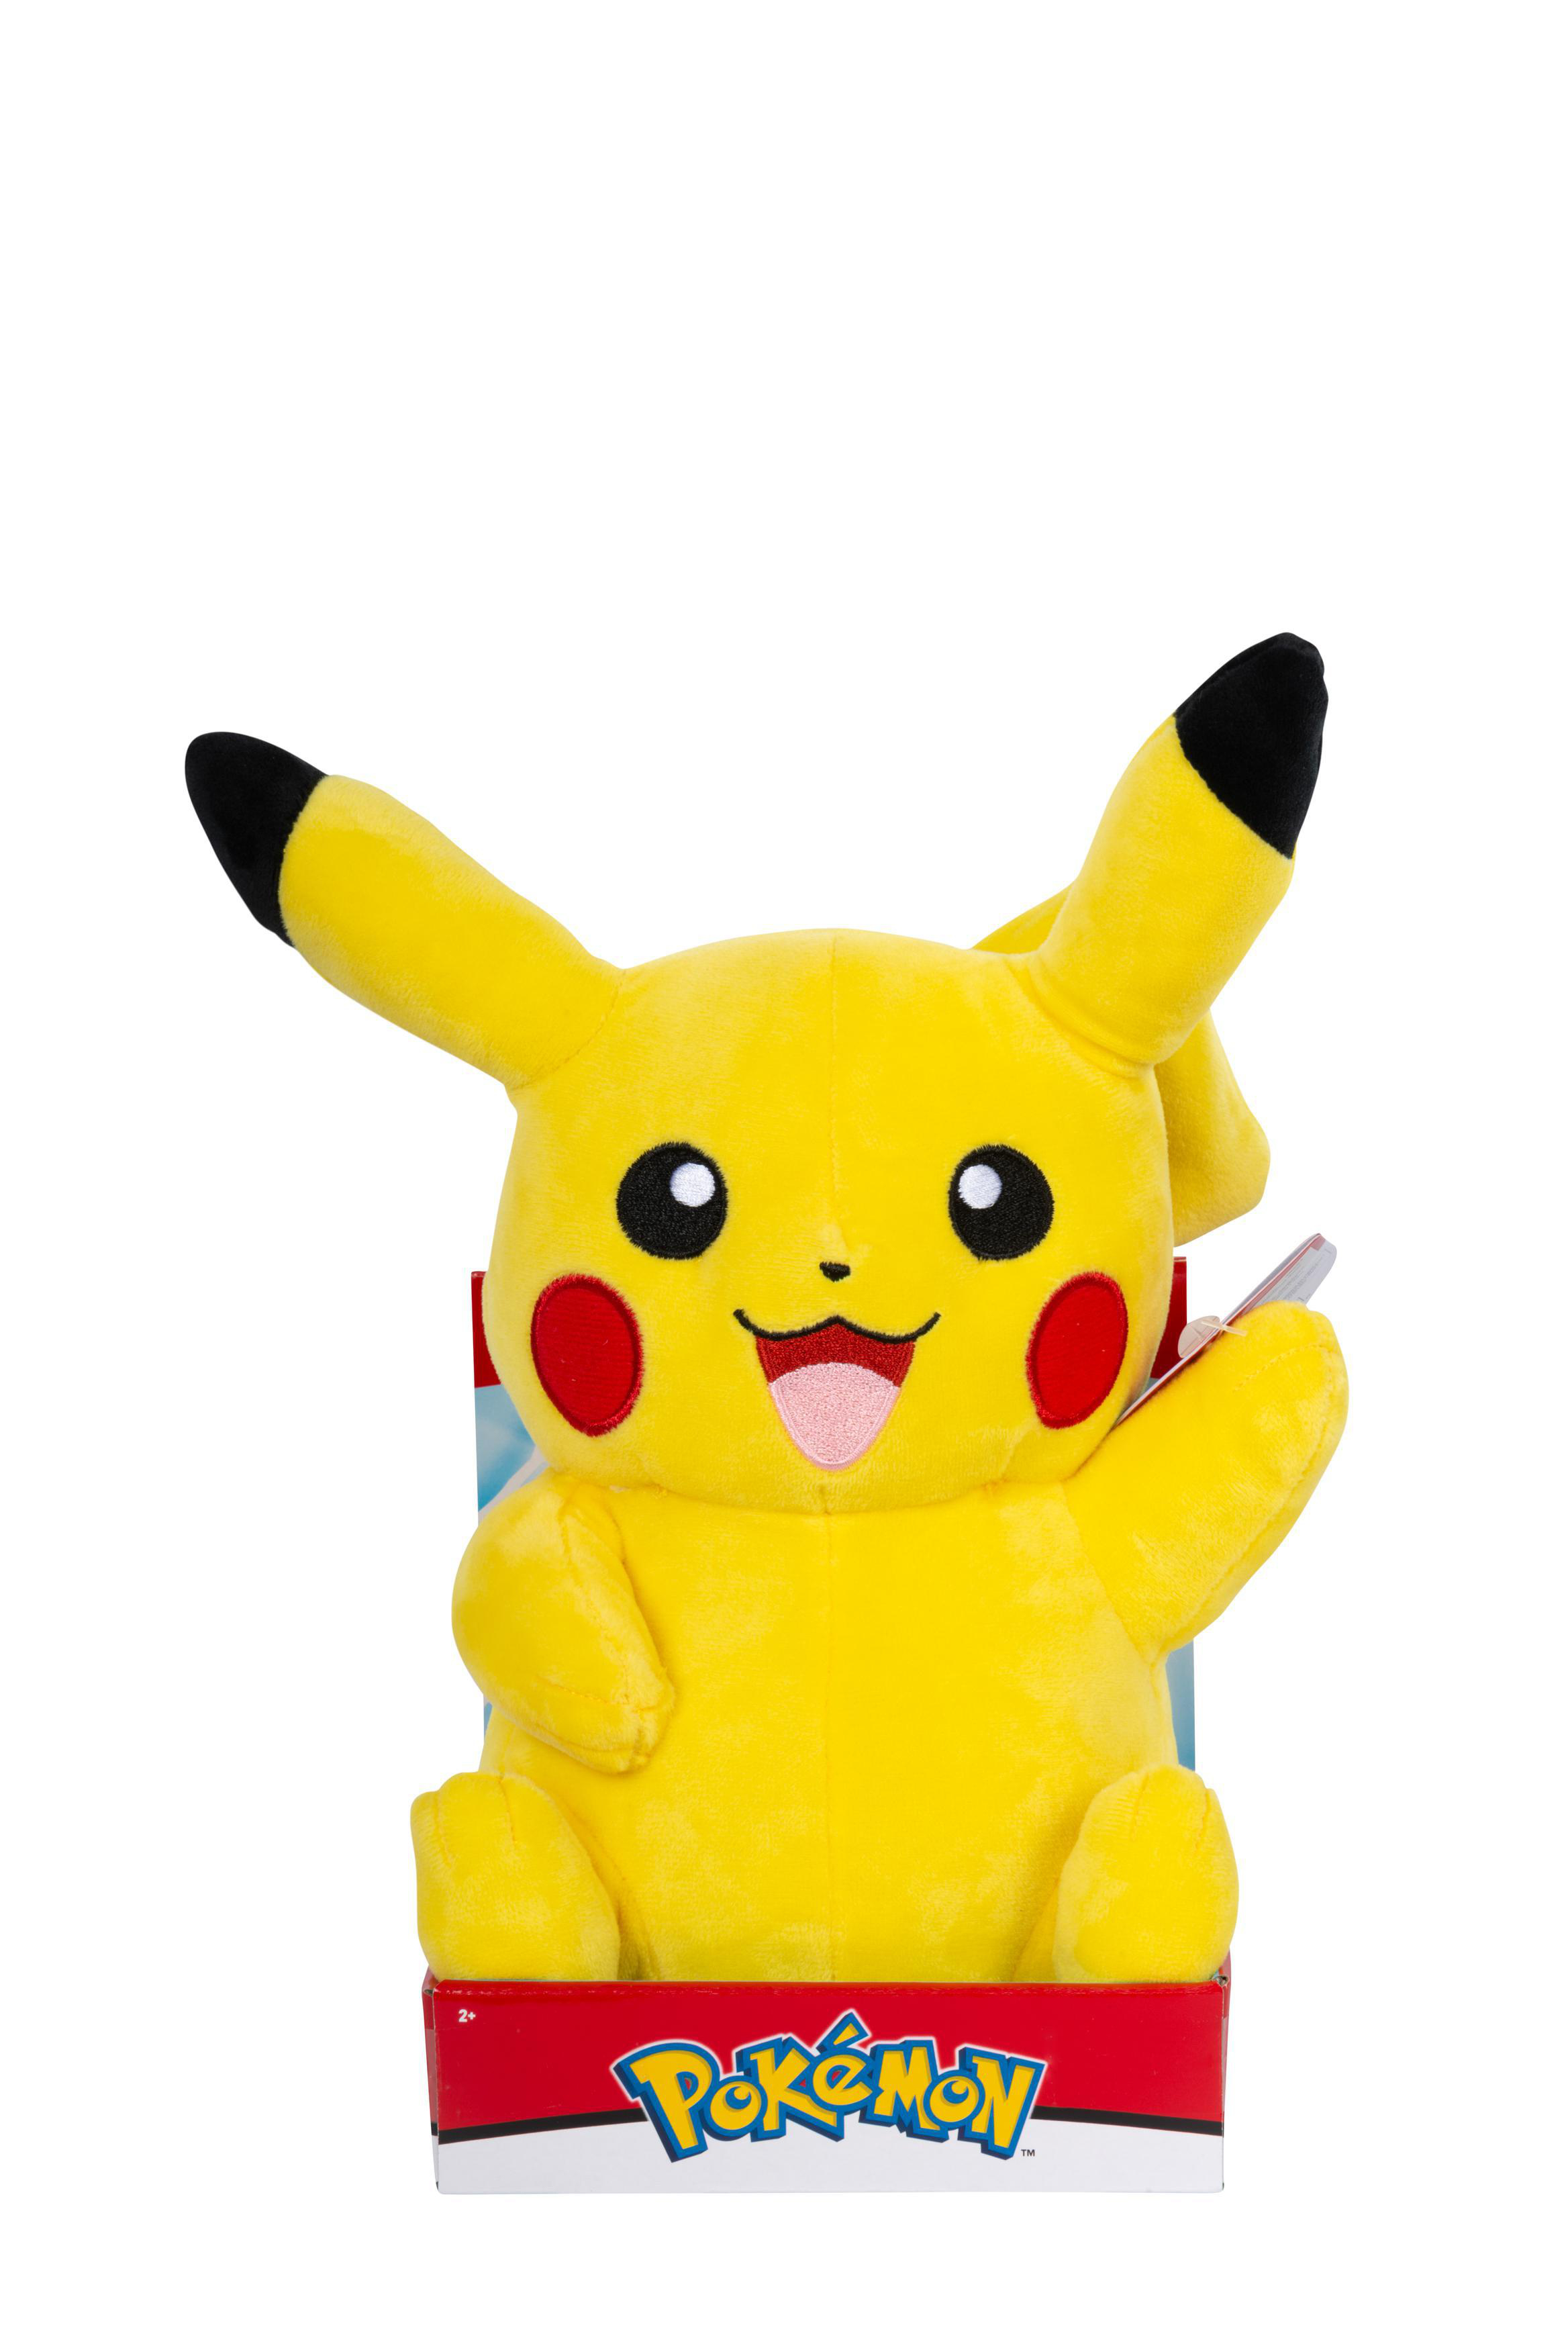 JAZWARES Pokémon - Pikachu Plüsch ca. - Plüschfigur 30 cm